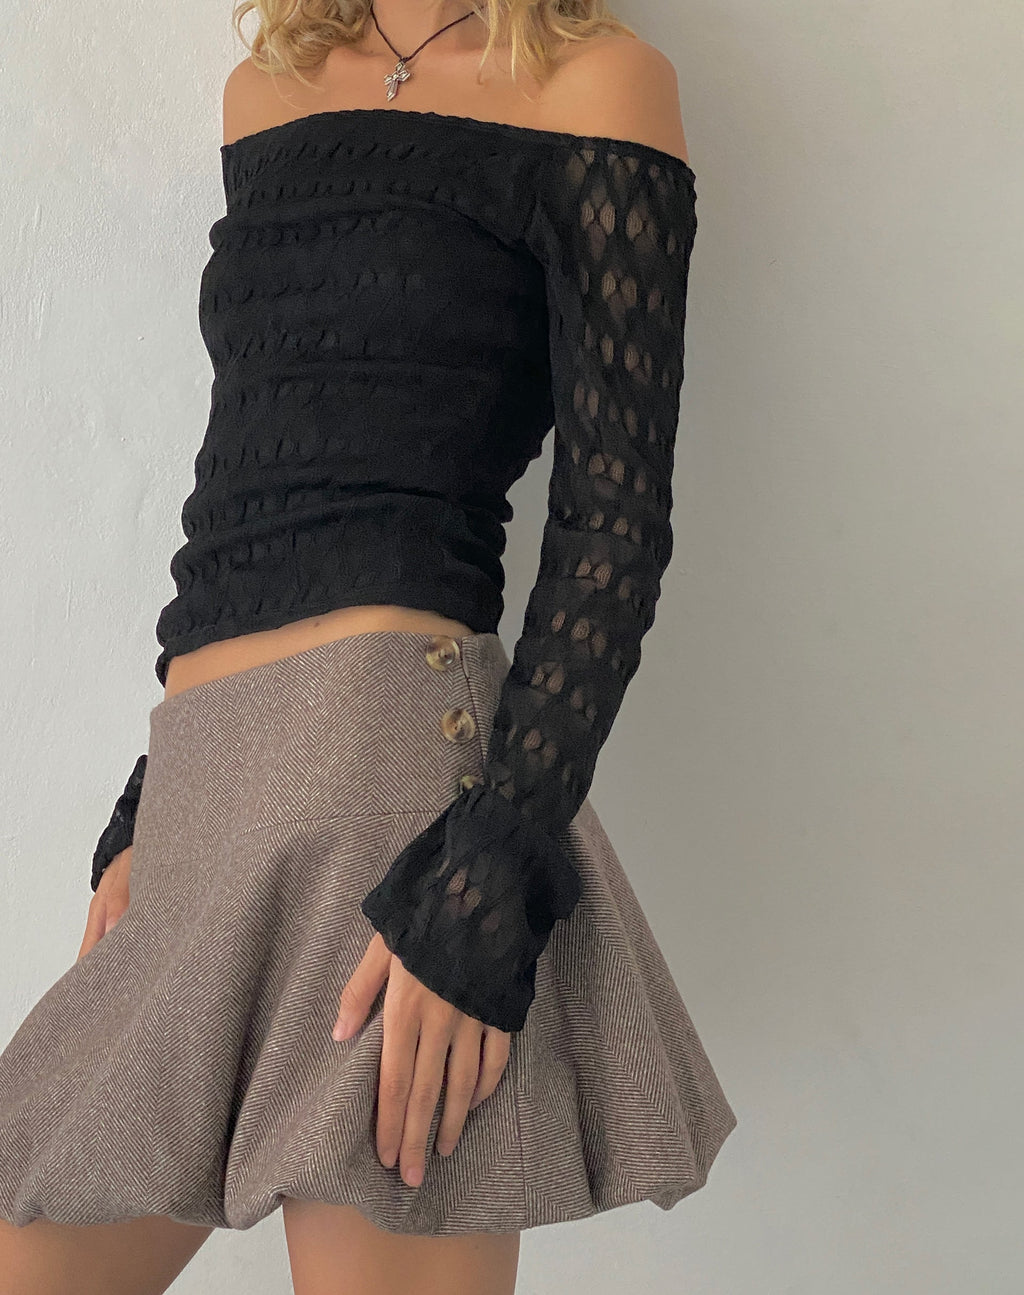 Neira Long Sleeve Bardot Top in Textured Knit Black